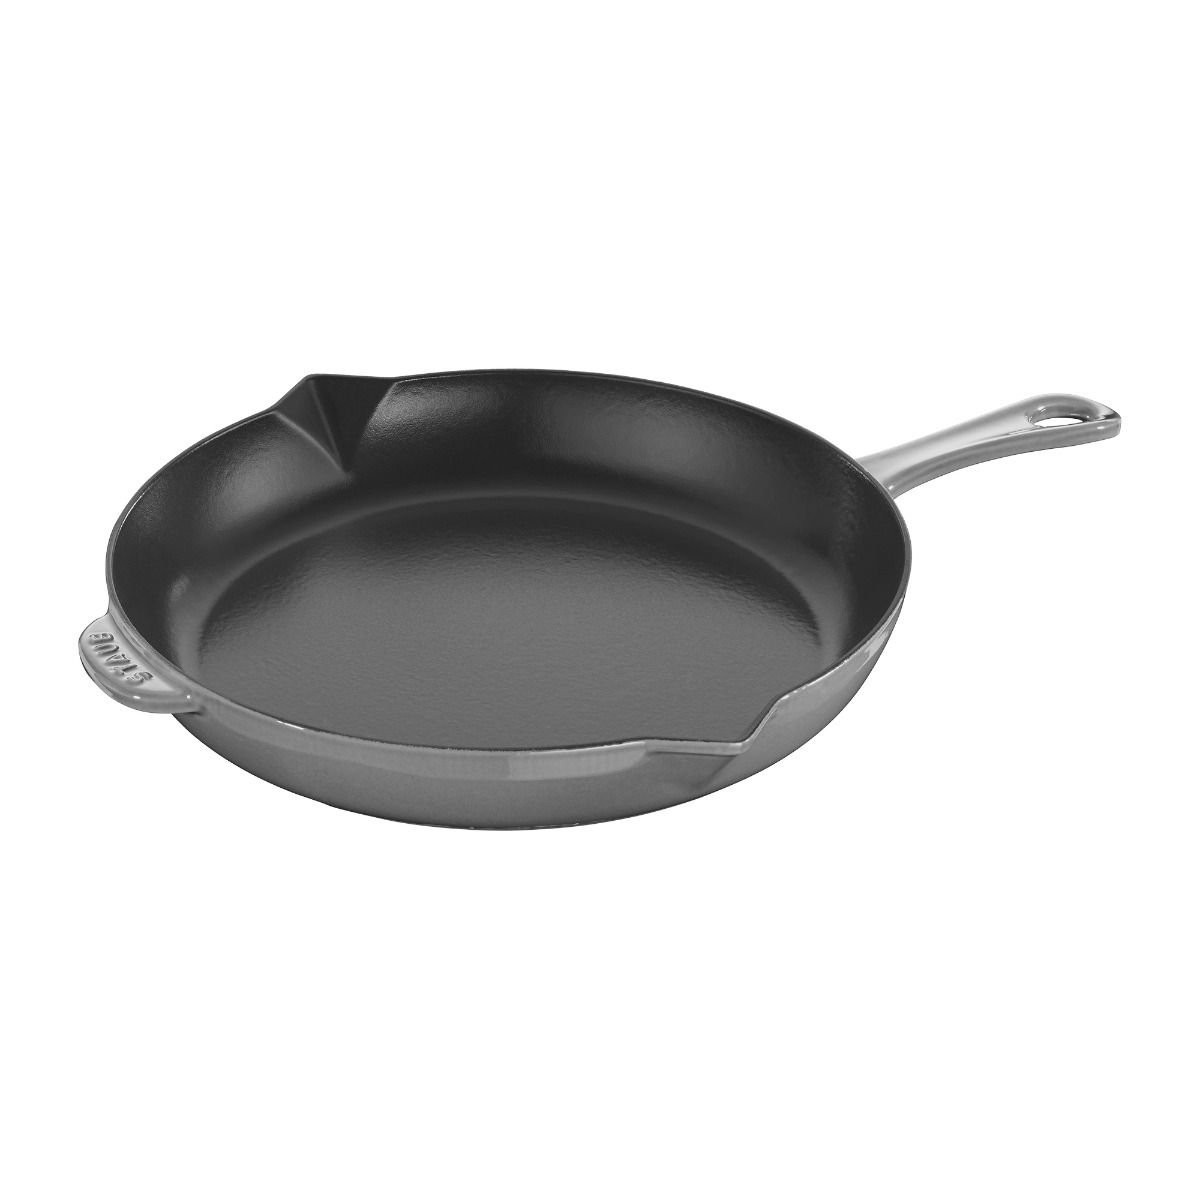 Staub 10 Skillet Enameled Cast Iron Frying Pan | Graphite Grey 5QT 1222618